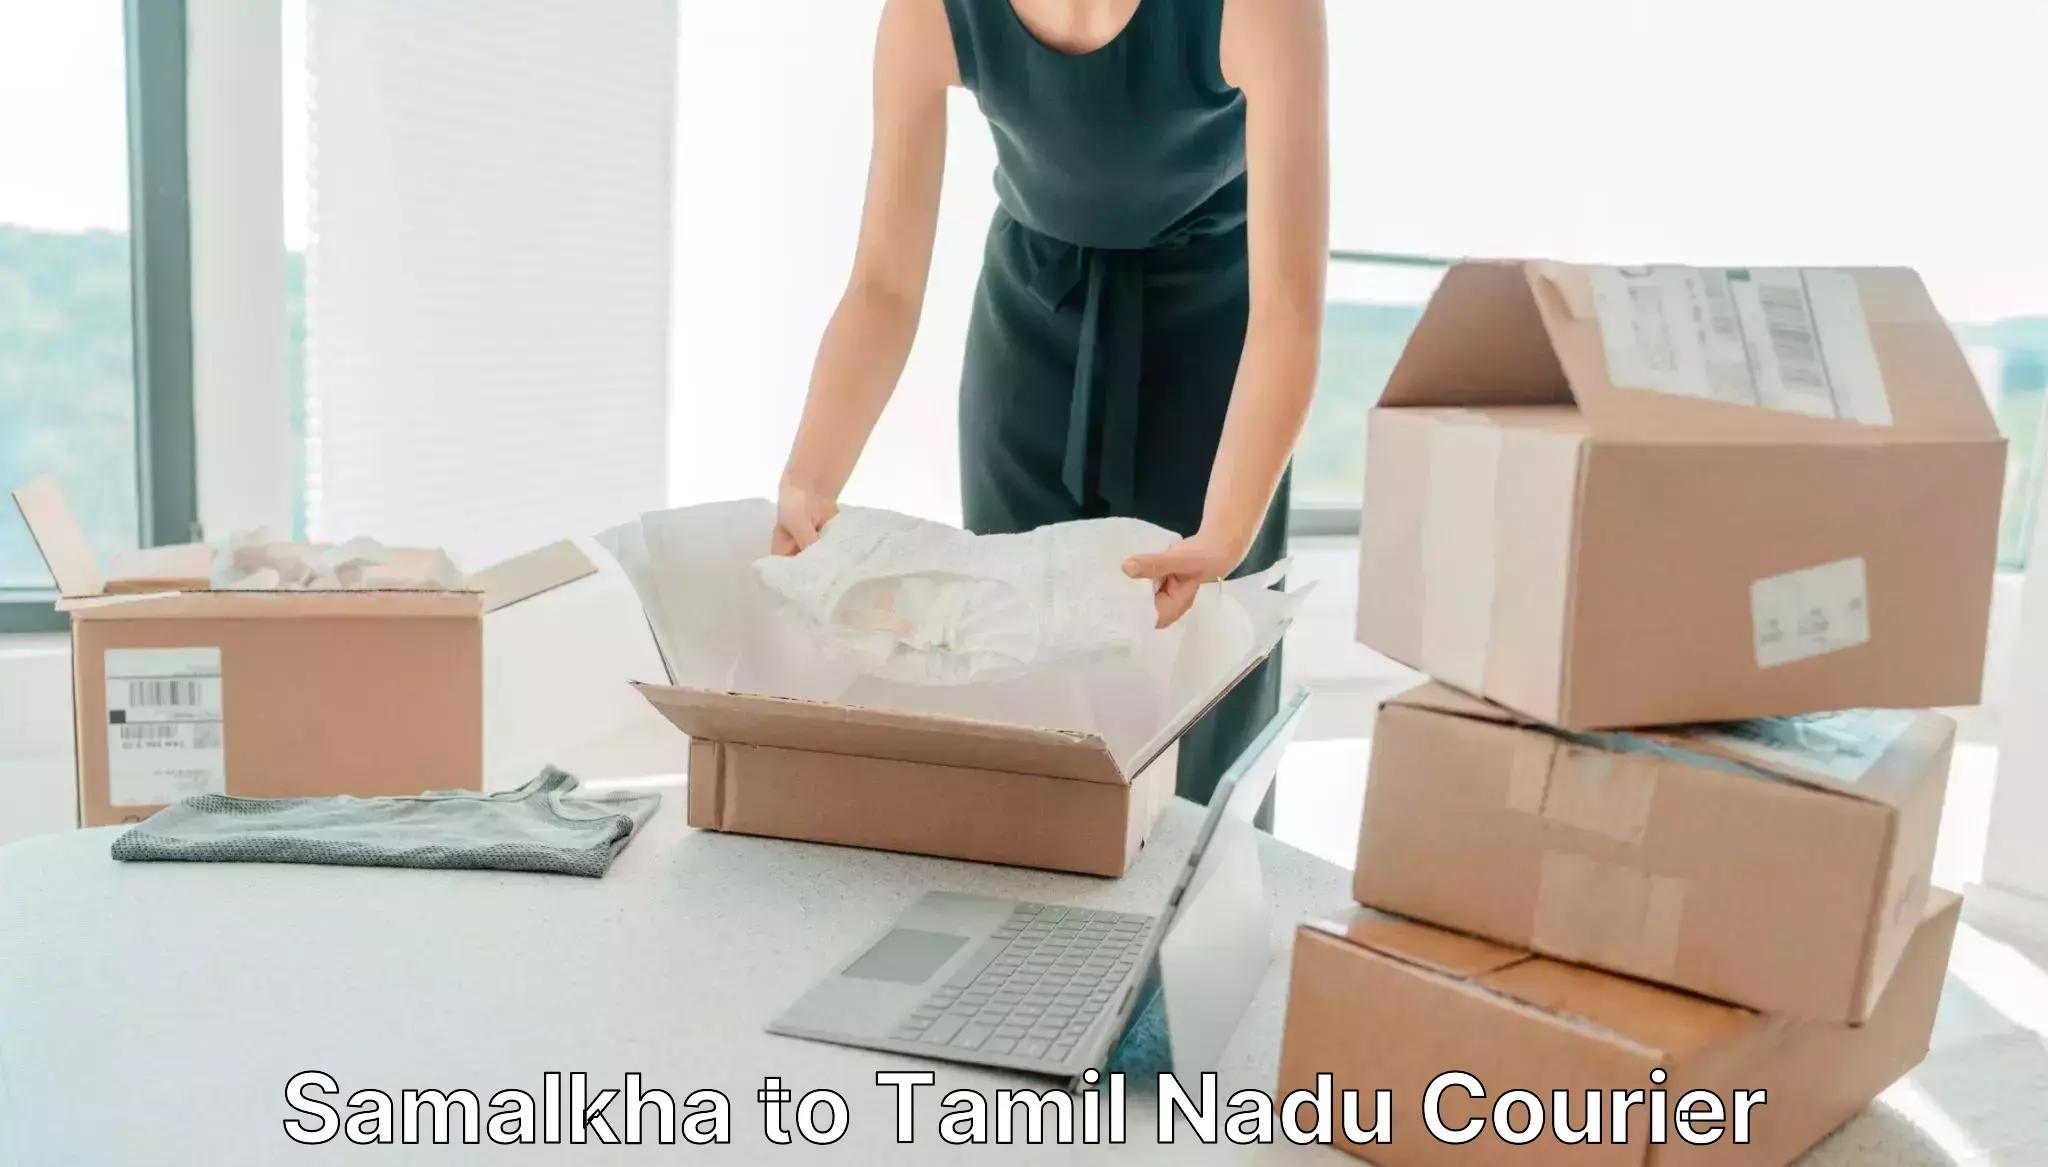 Professional courier handling Samalkha to Tamil Nadu